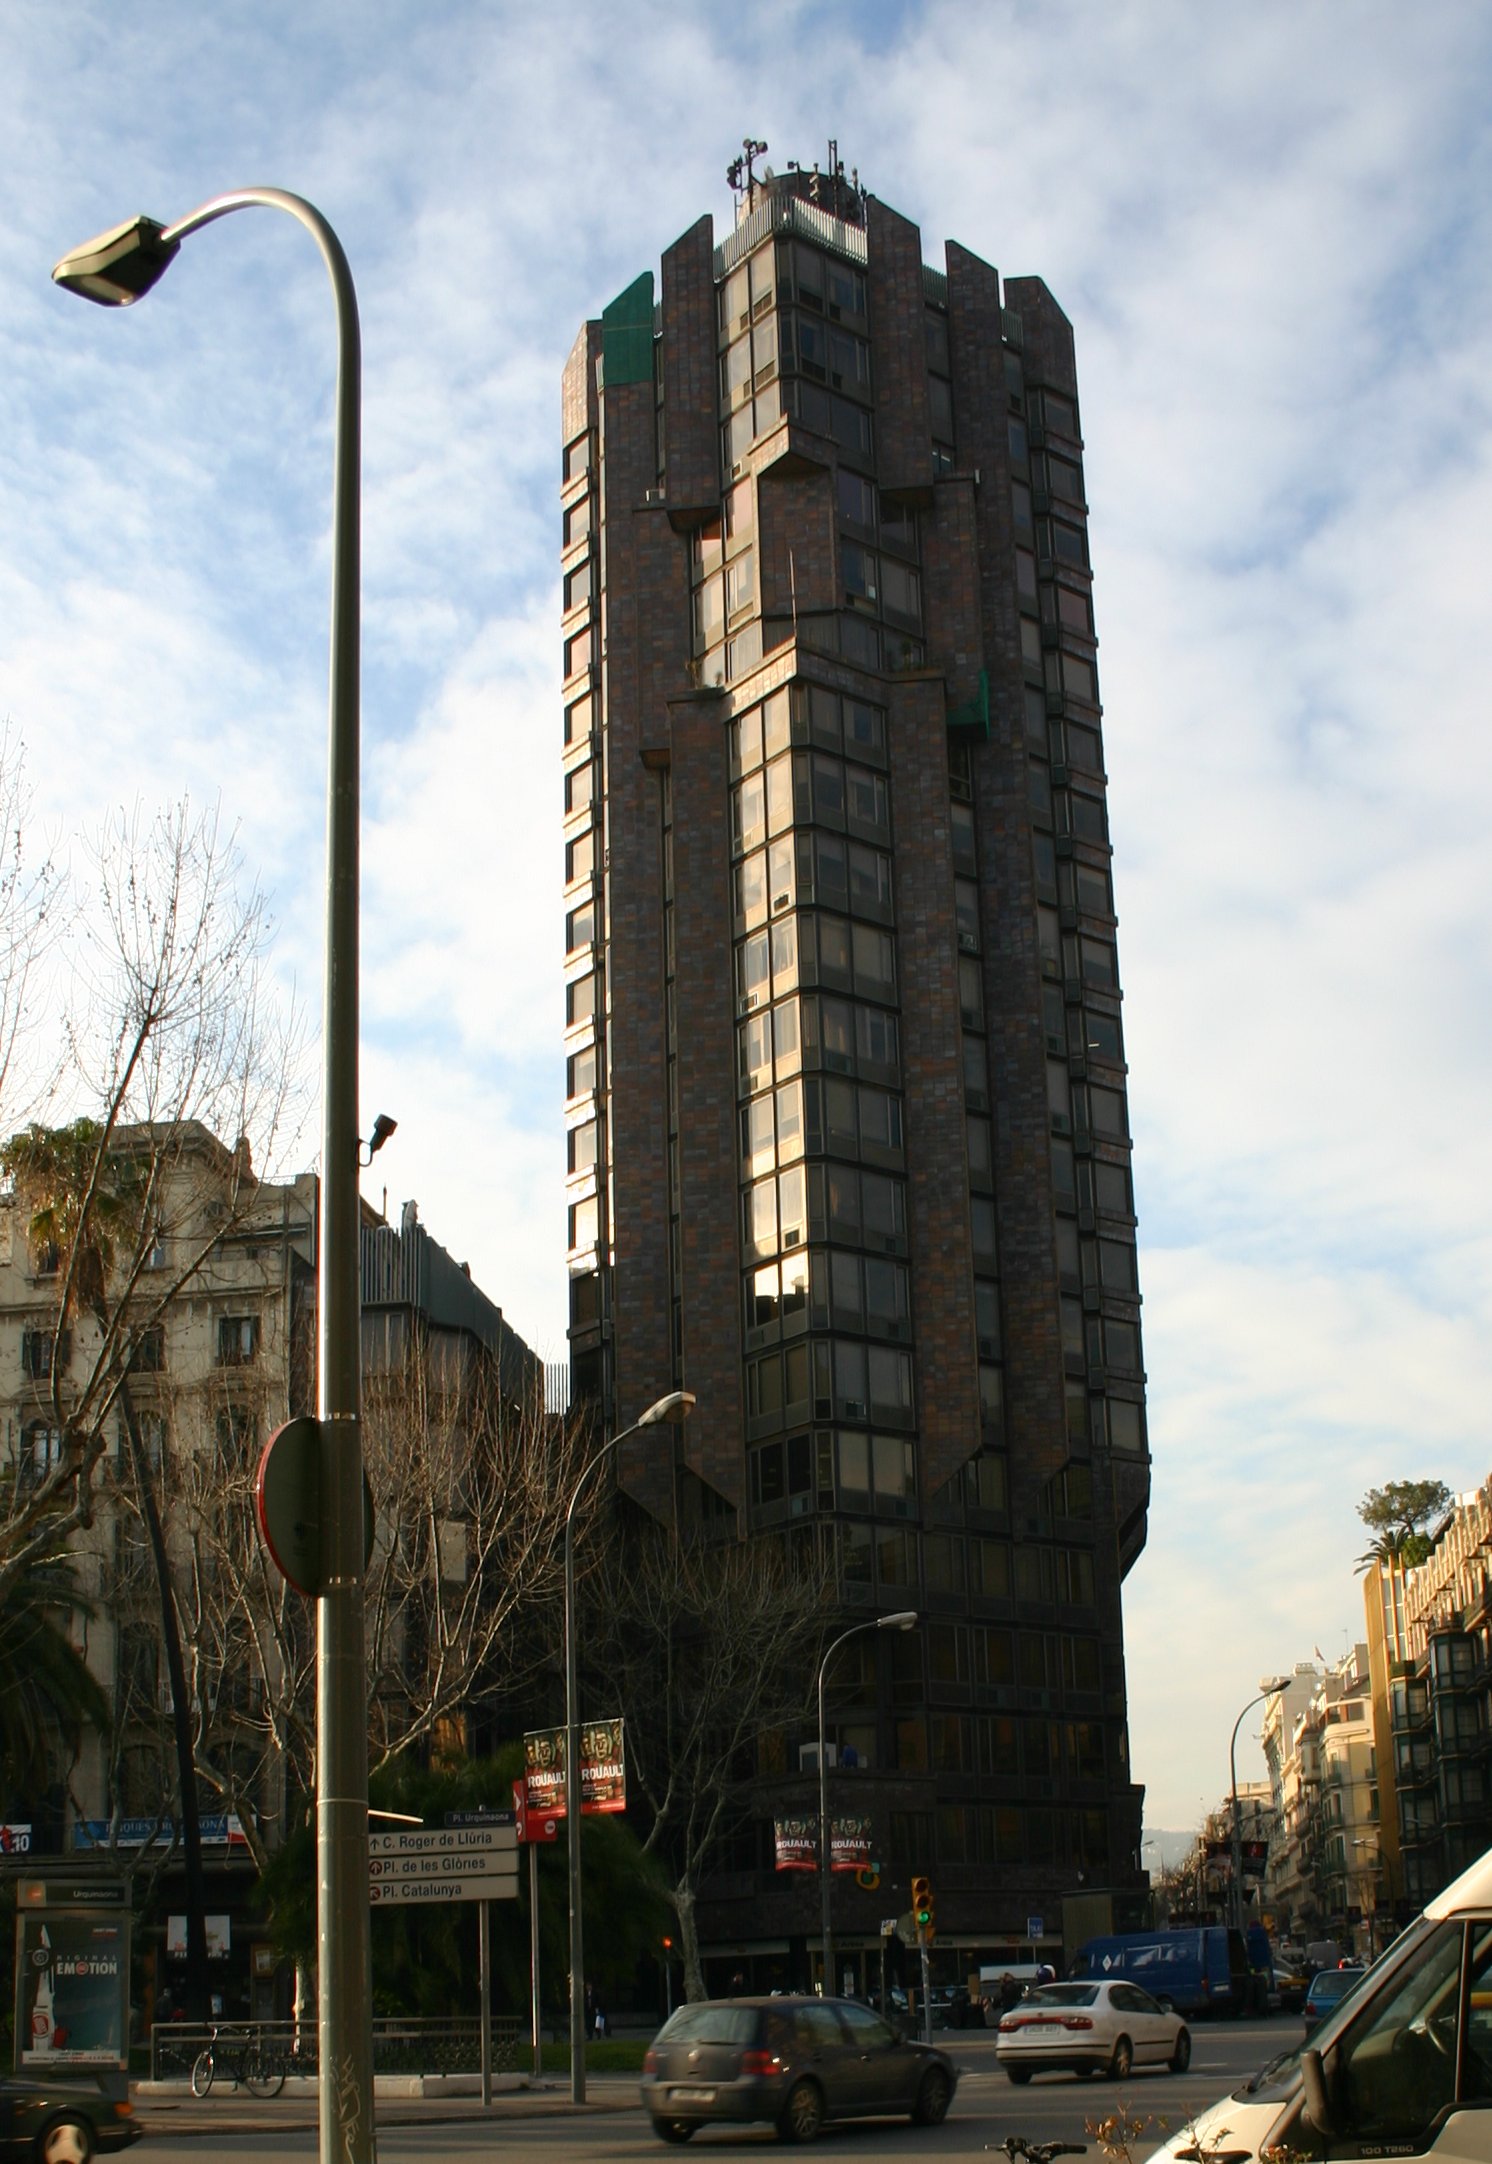 Spain Barcelona